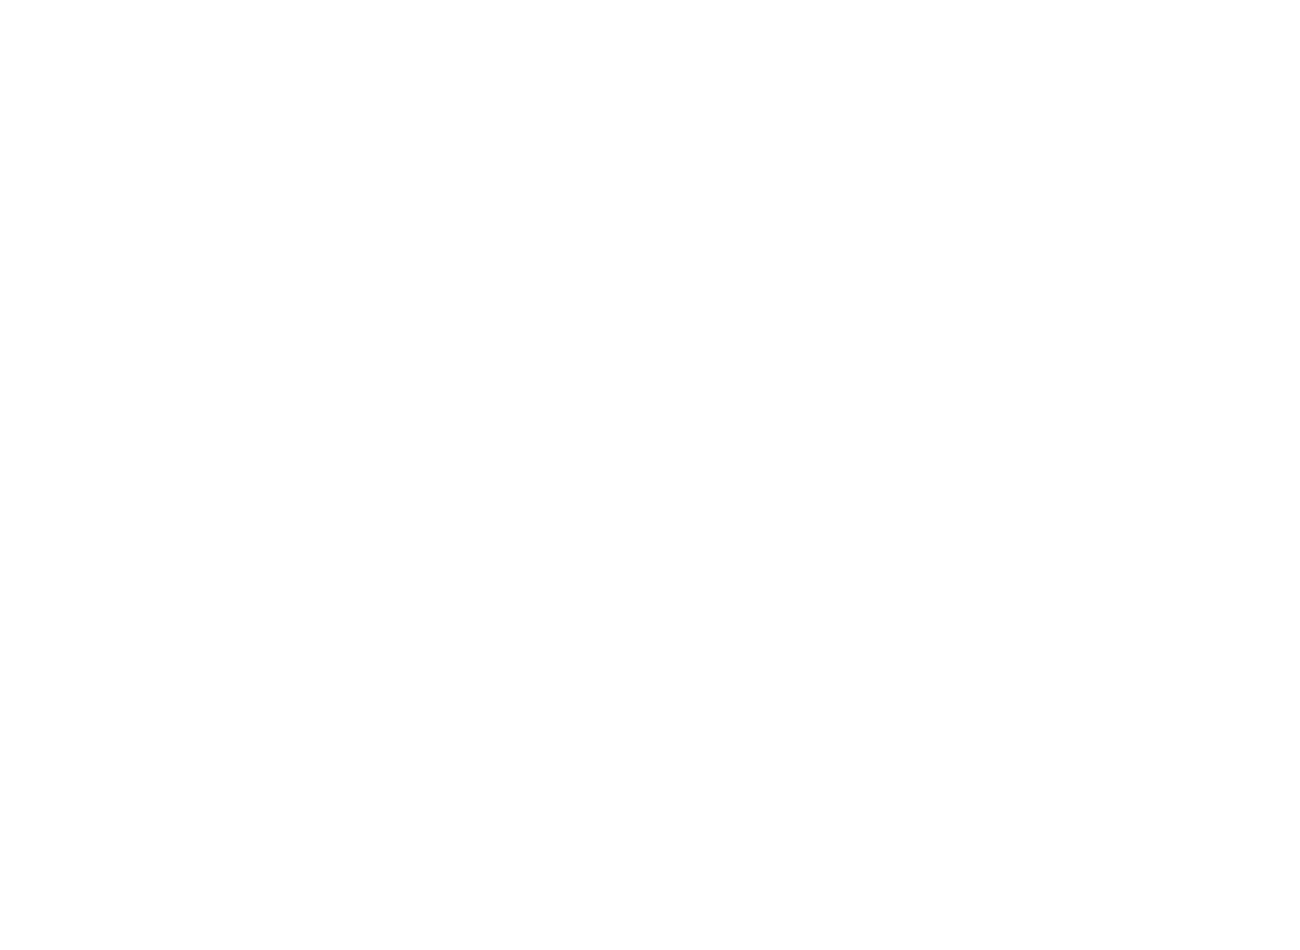 Key to Chiaretto